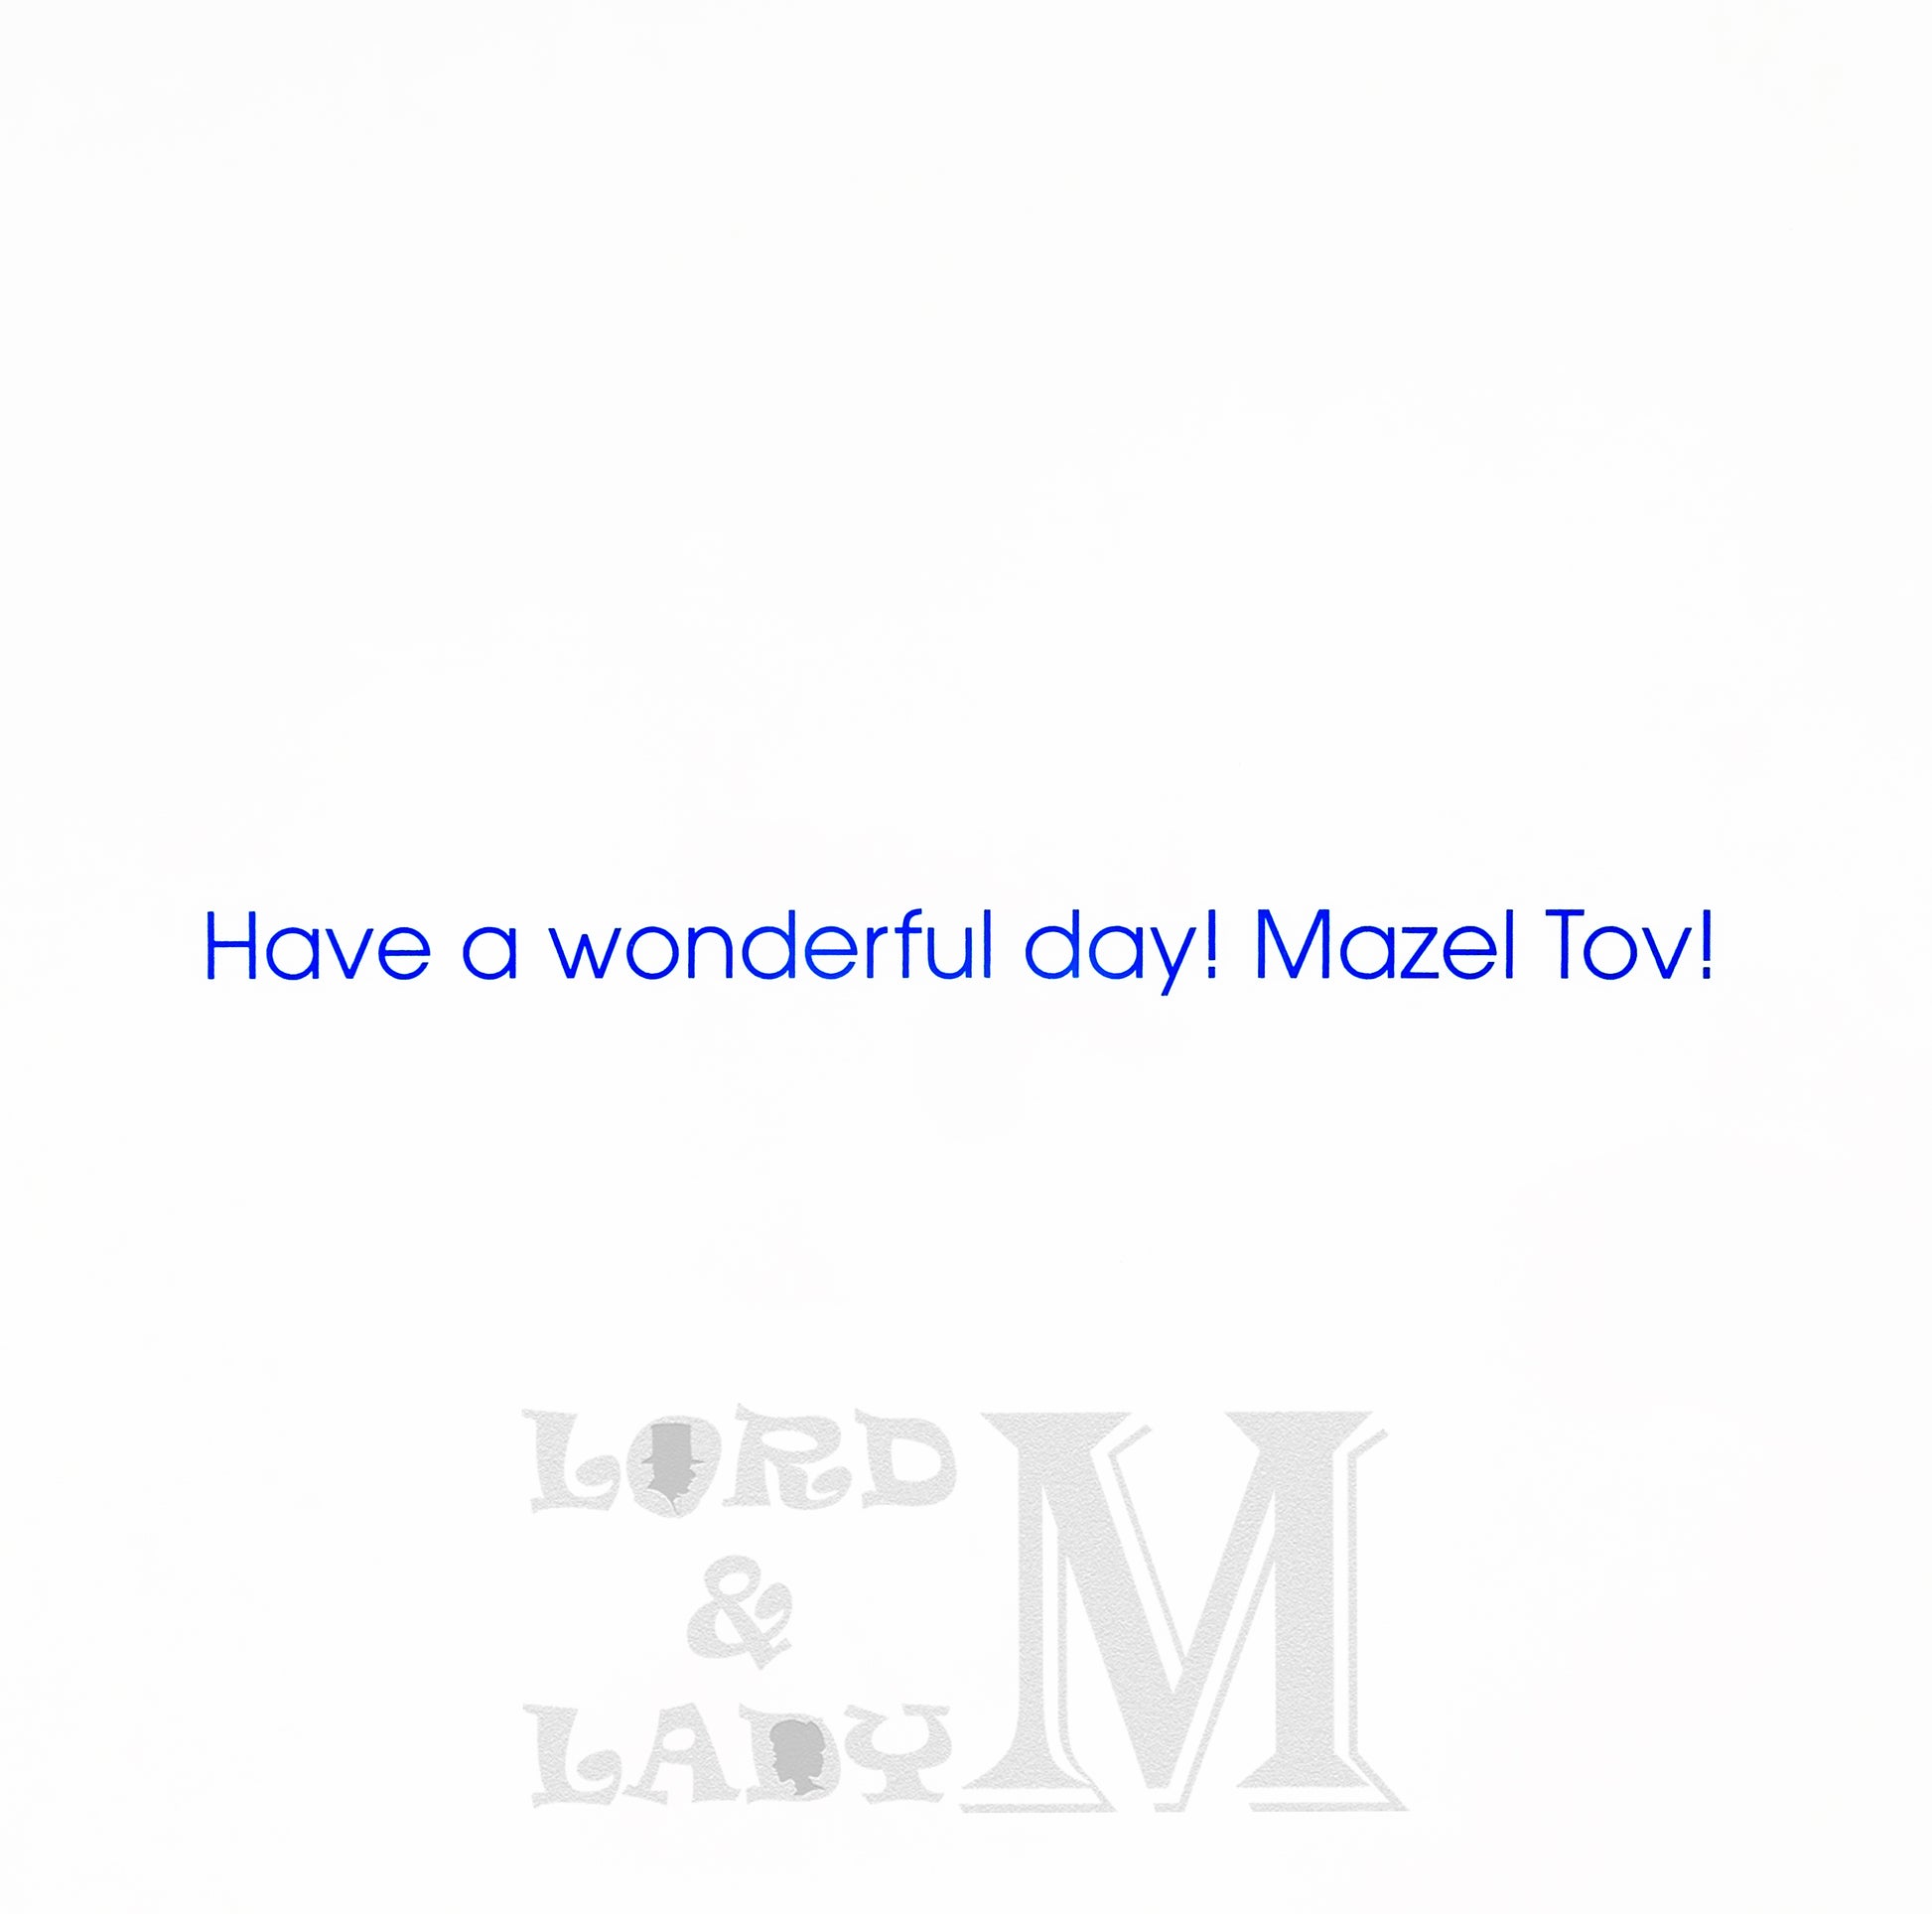 15cm - Mazel Tov On Your Bat Mitzvah You're ..- DV